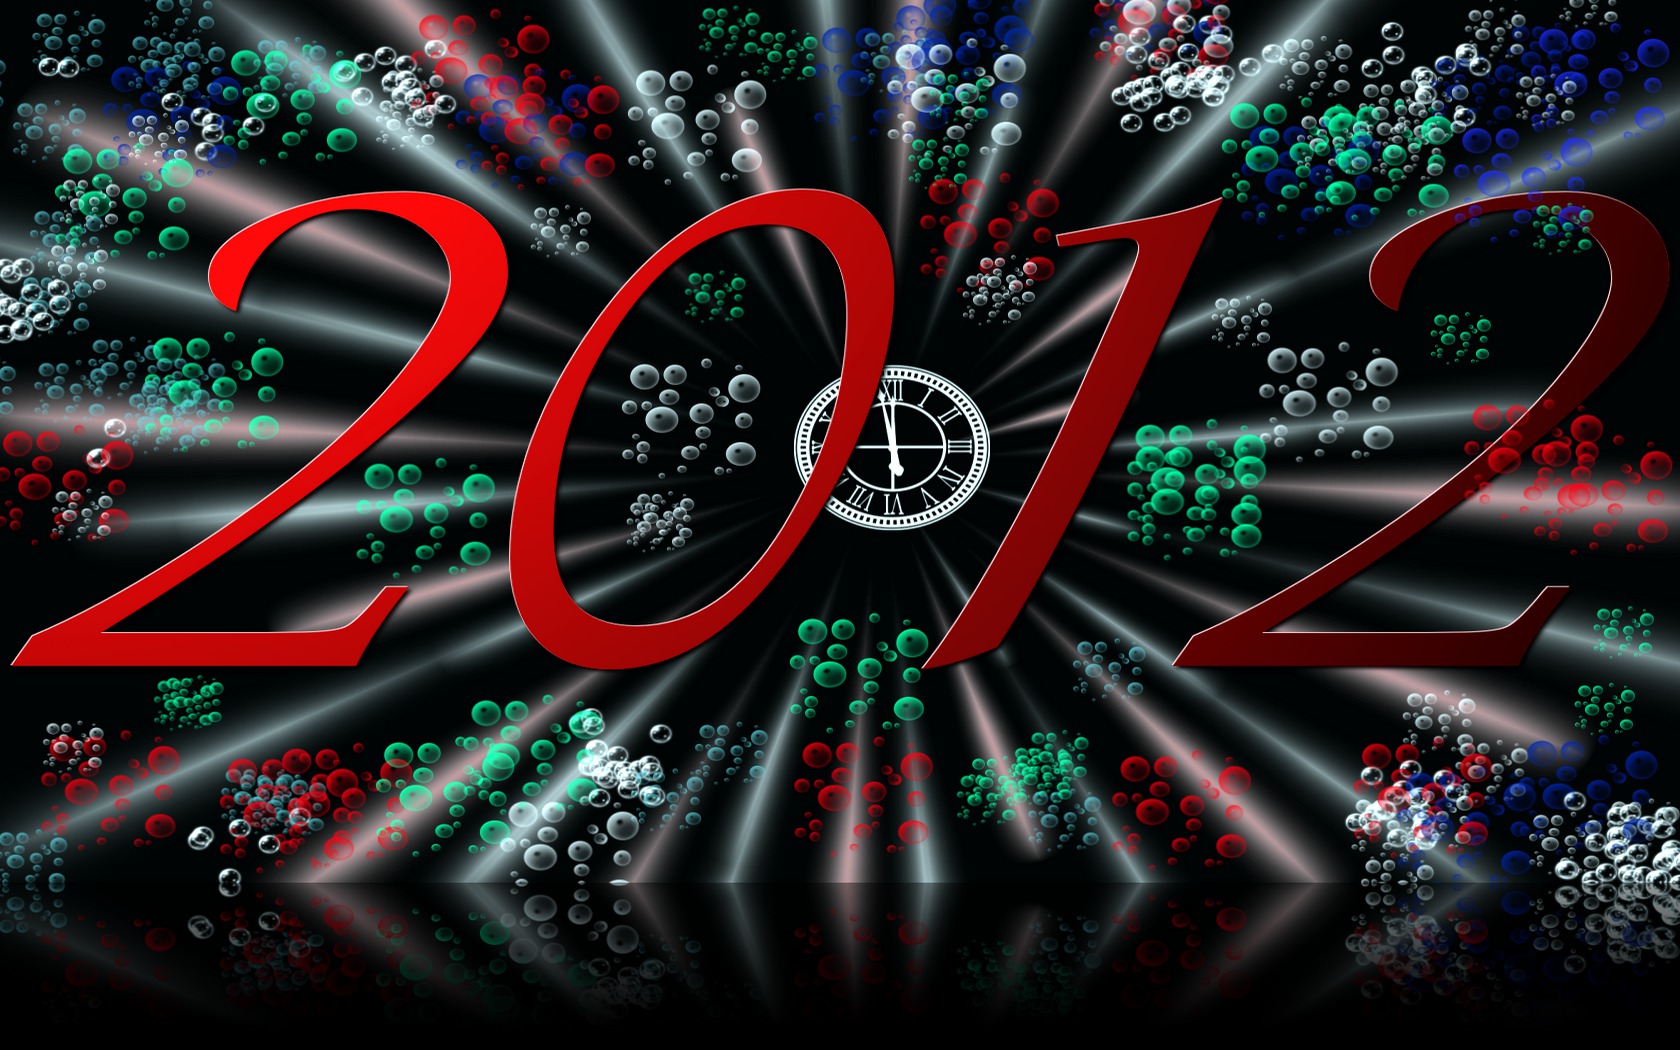 Holiday New Year 2012 Wallpaper